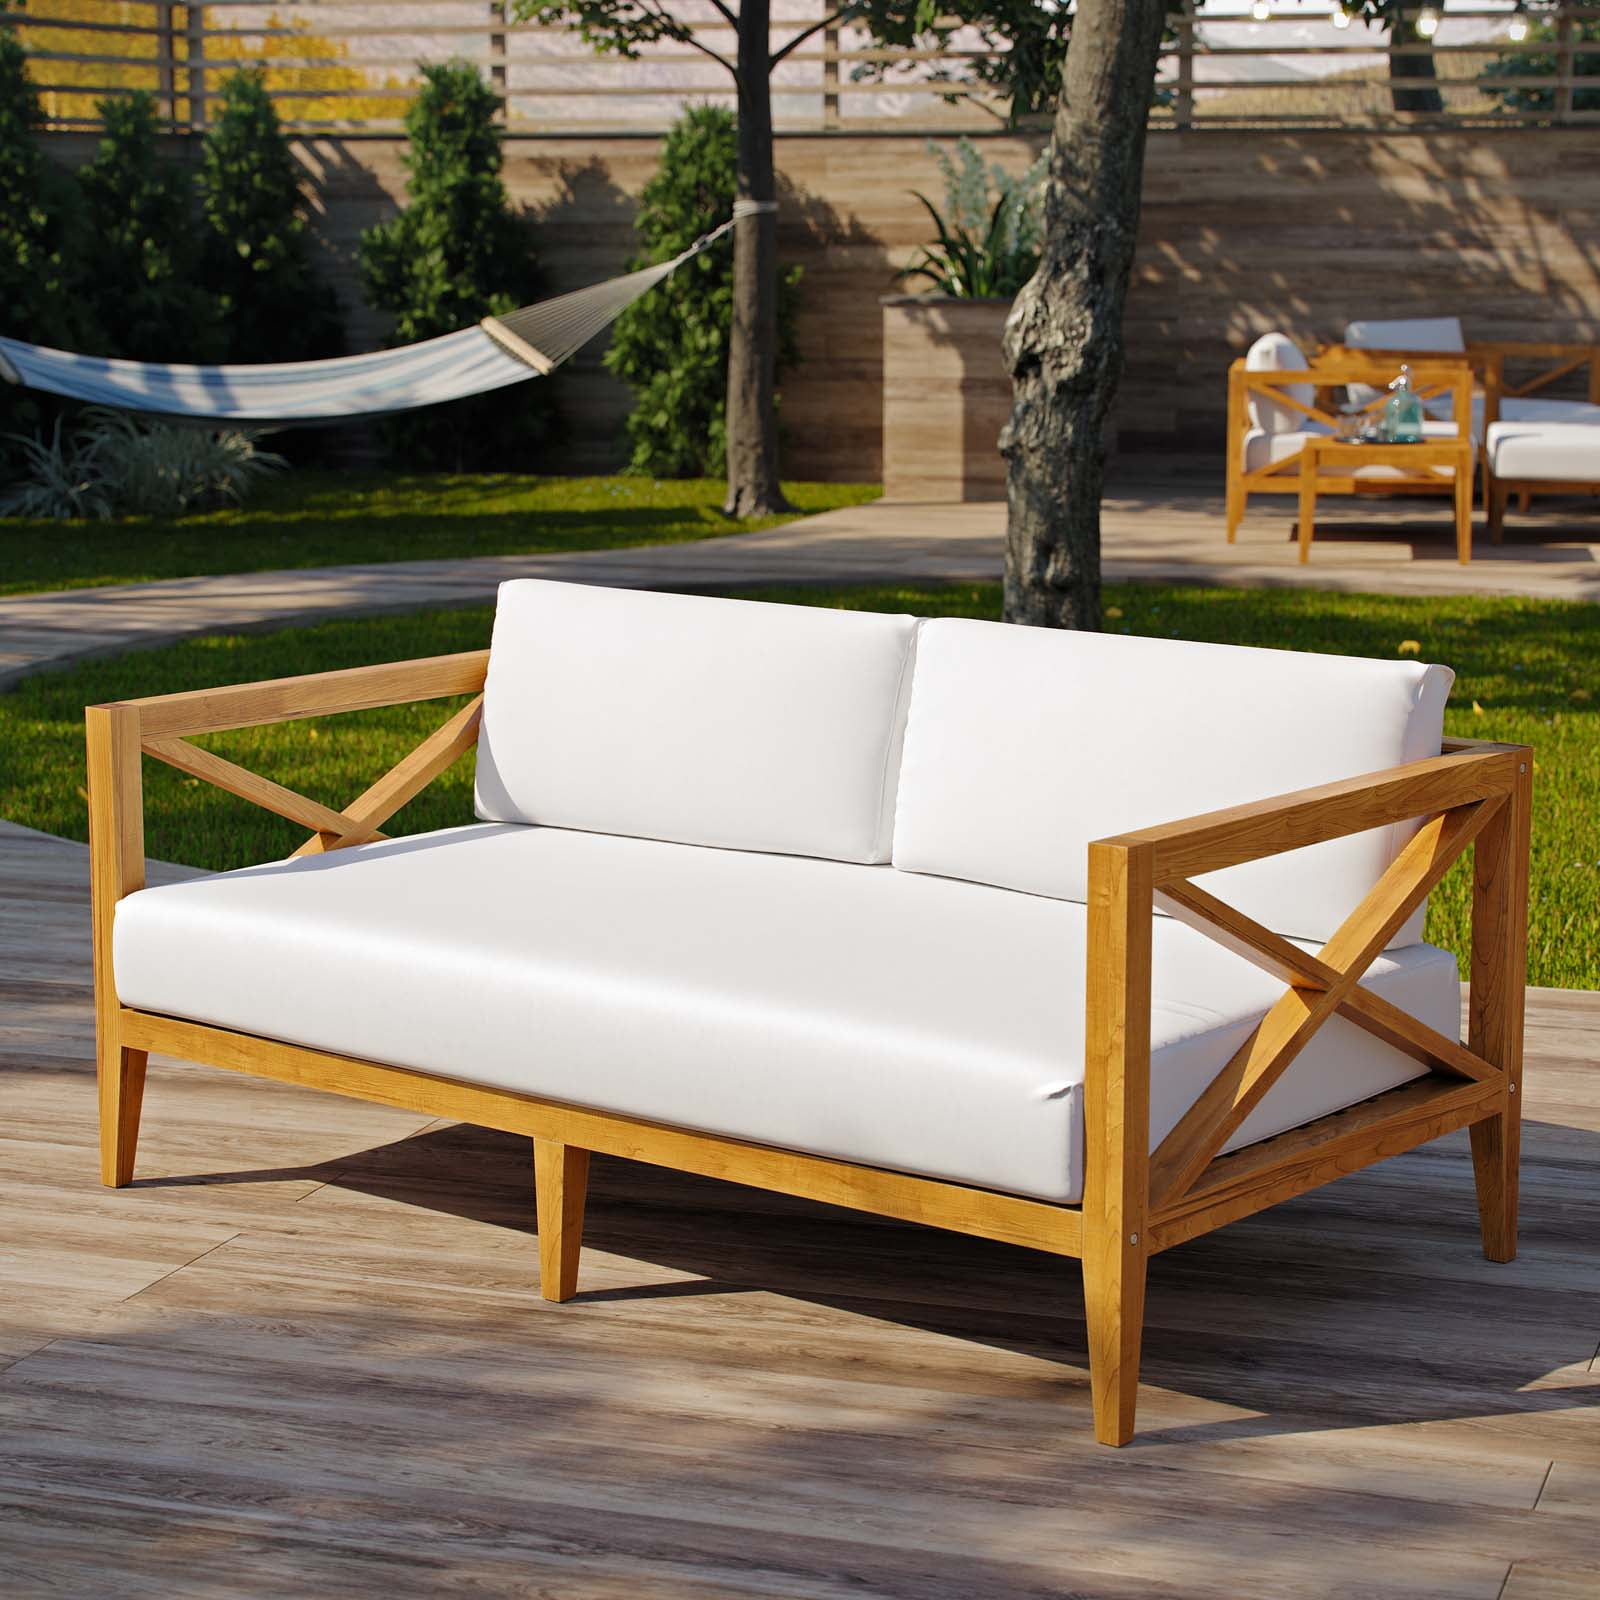 Upgrade Your Outdoor Space With Premium Teak Furniture